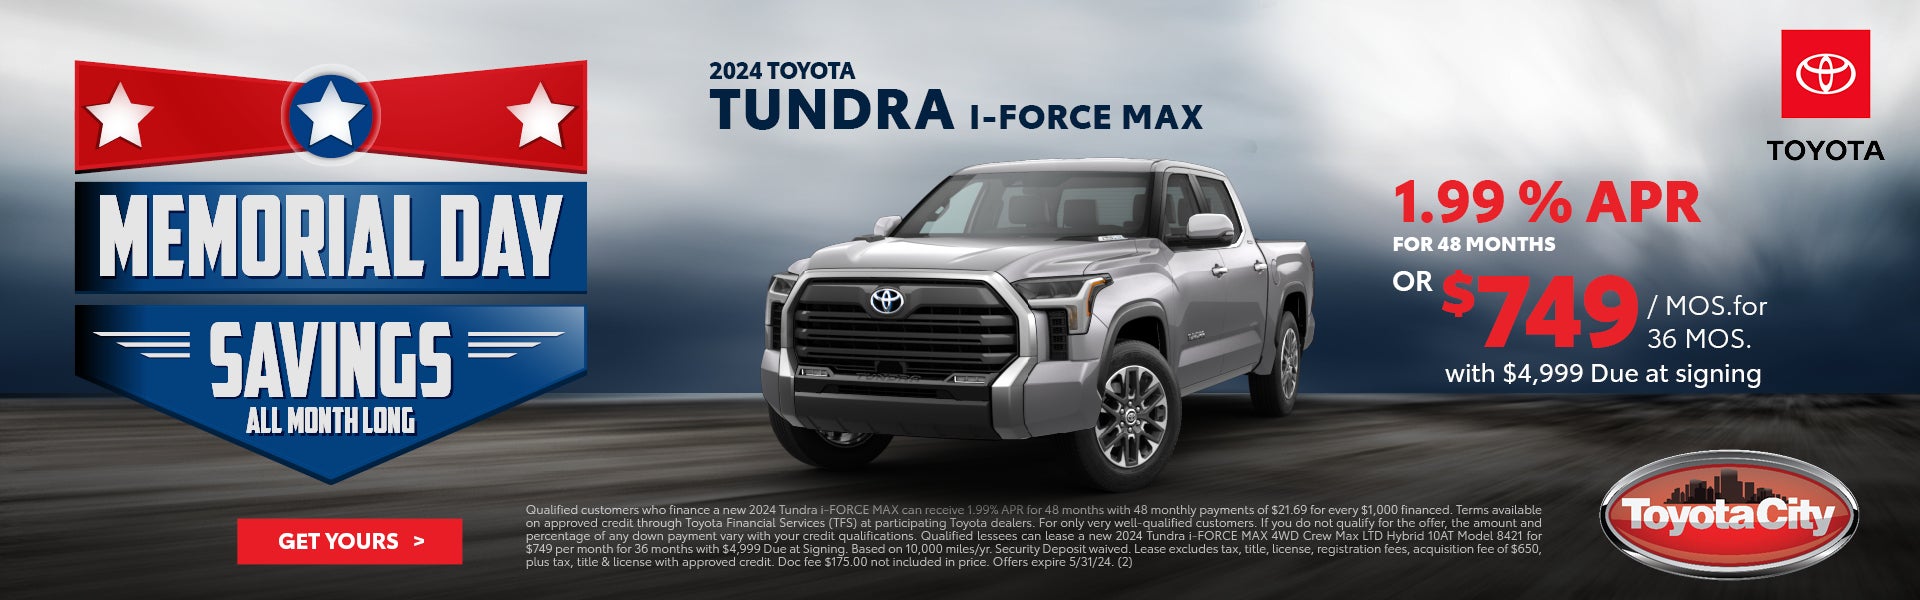 2024 Toyota Tundra I-Force-Max